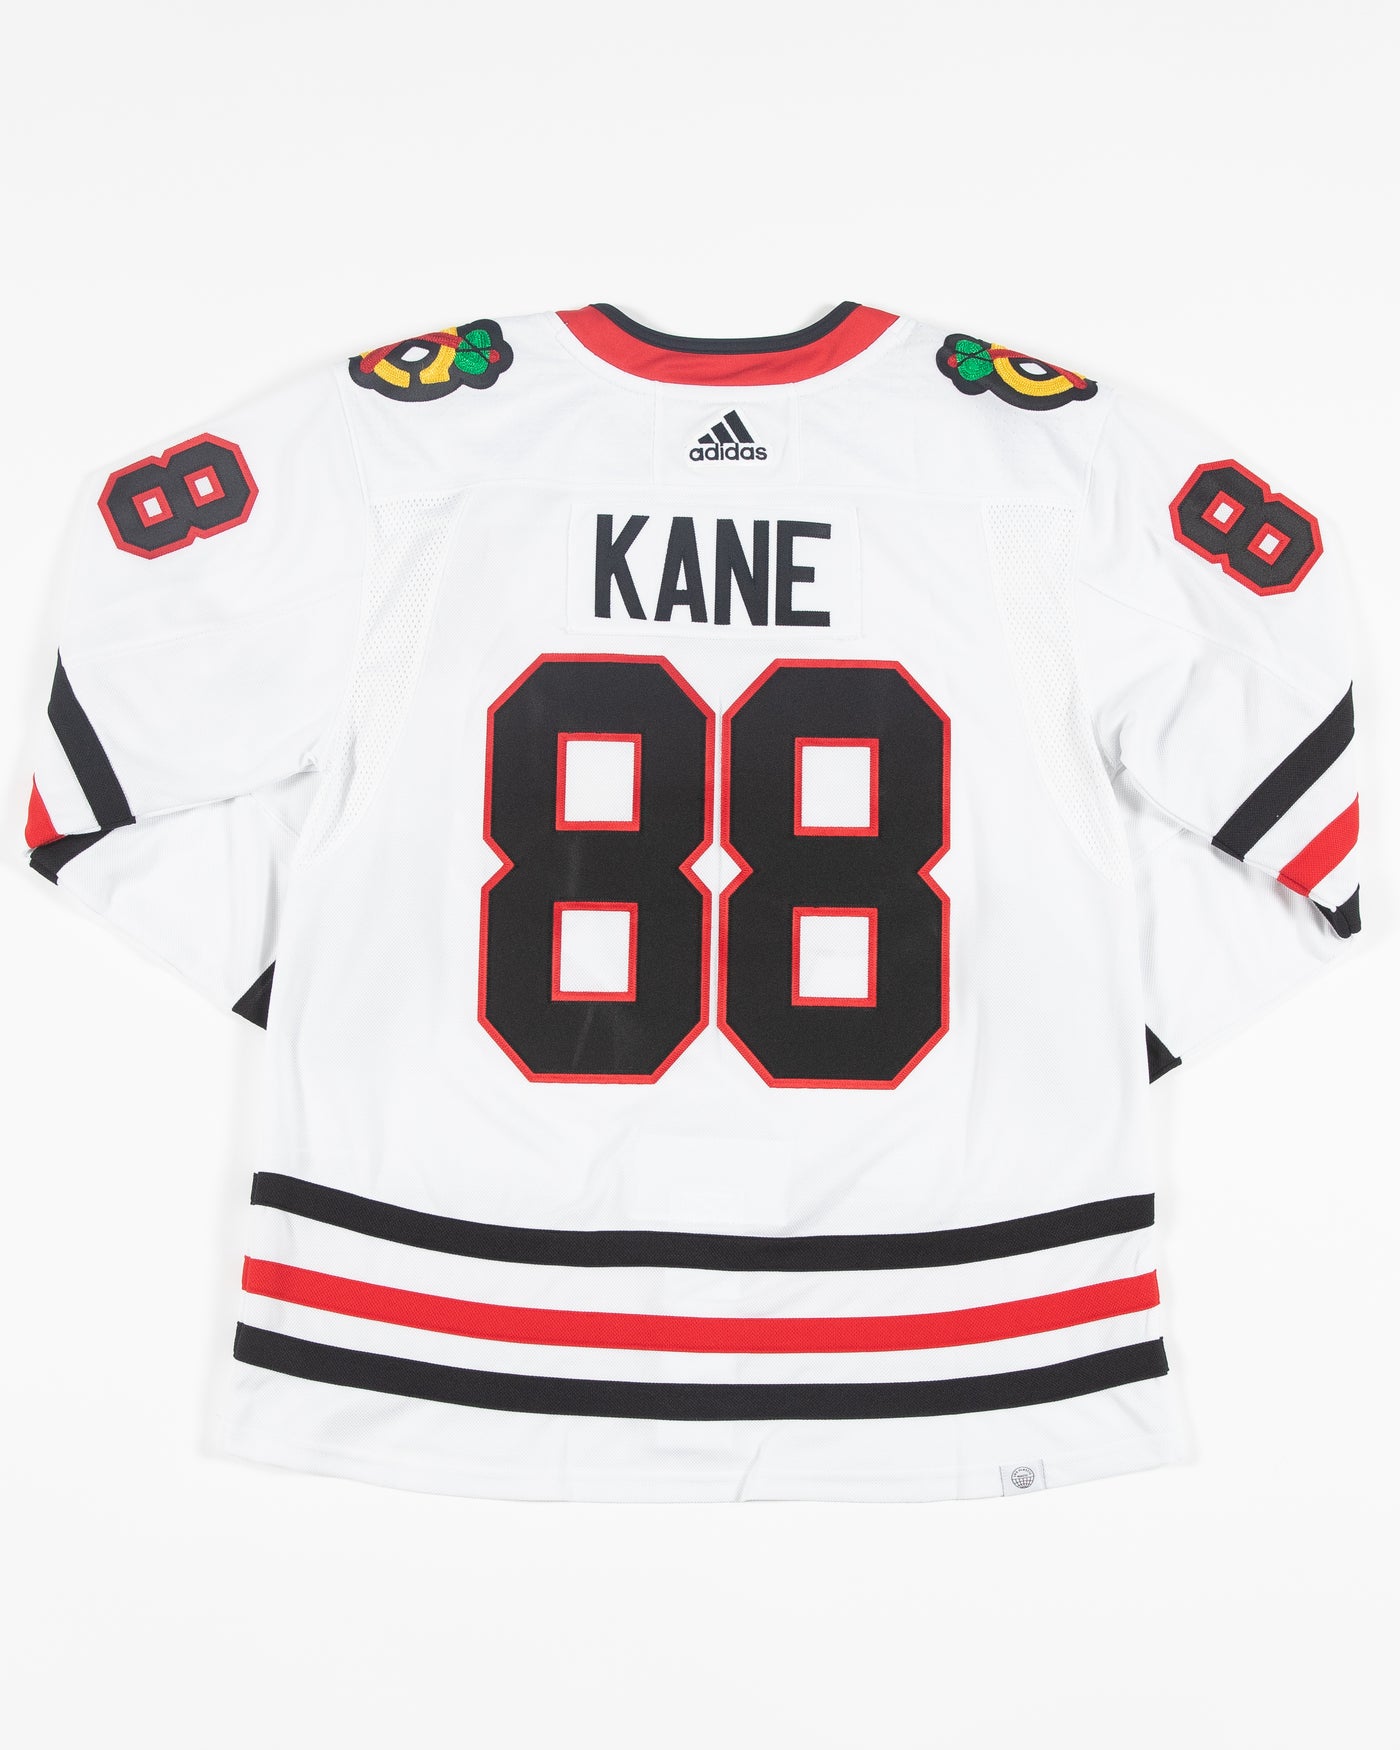 adidas Patrick Kane Chicago Blackhawks Authentic Away NHL Hockey Jersey :  : Sports & Outdoors